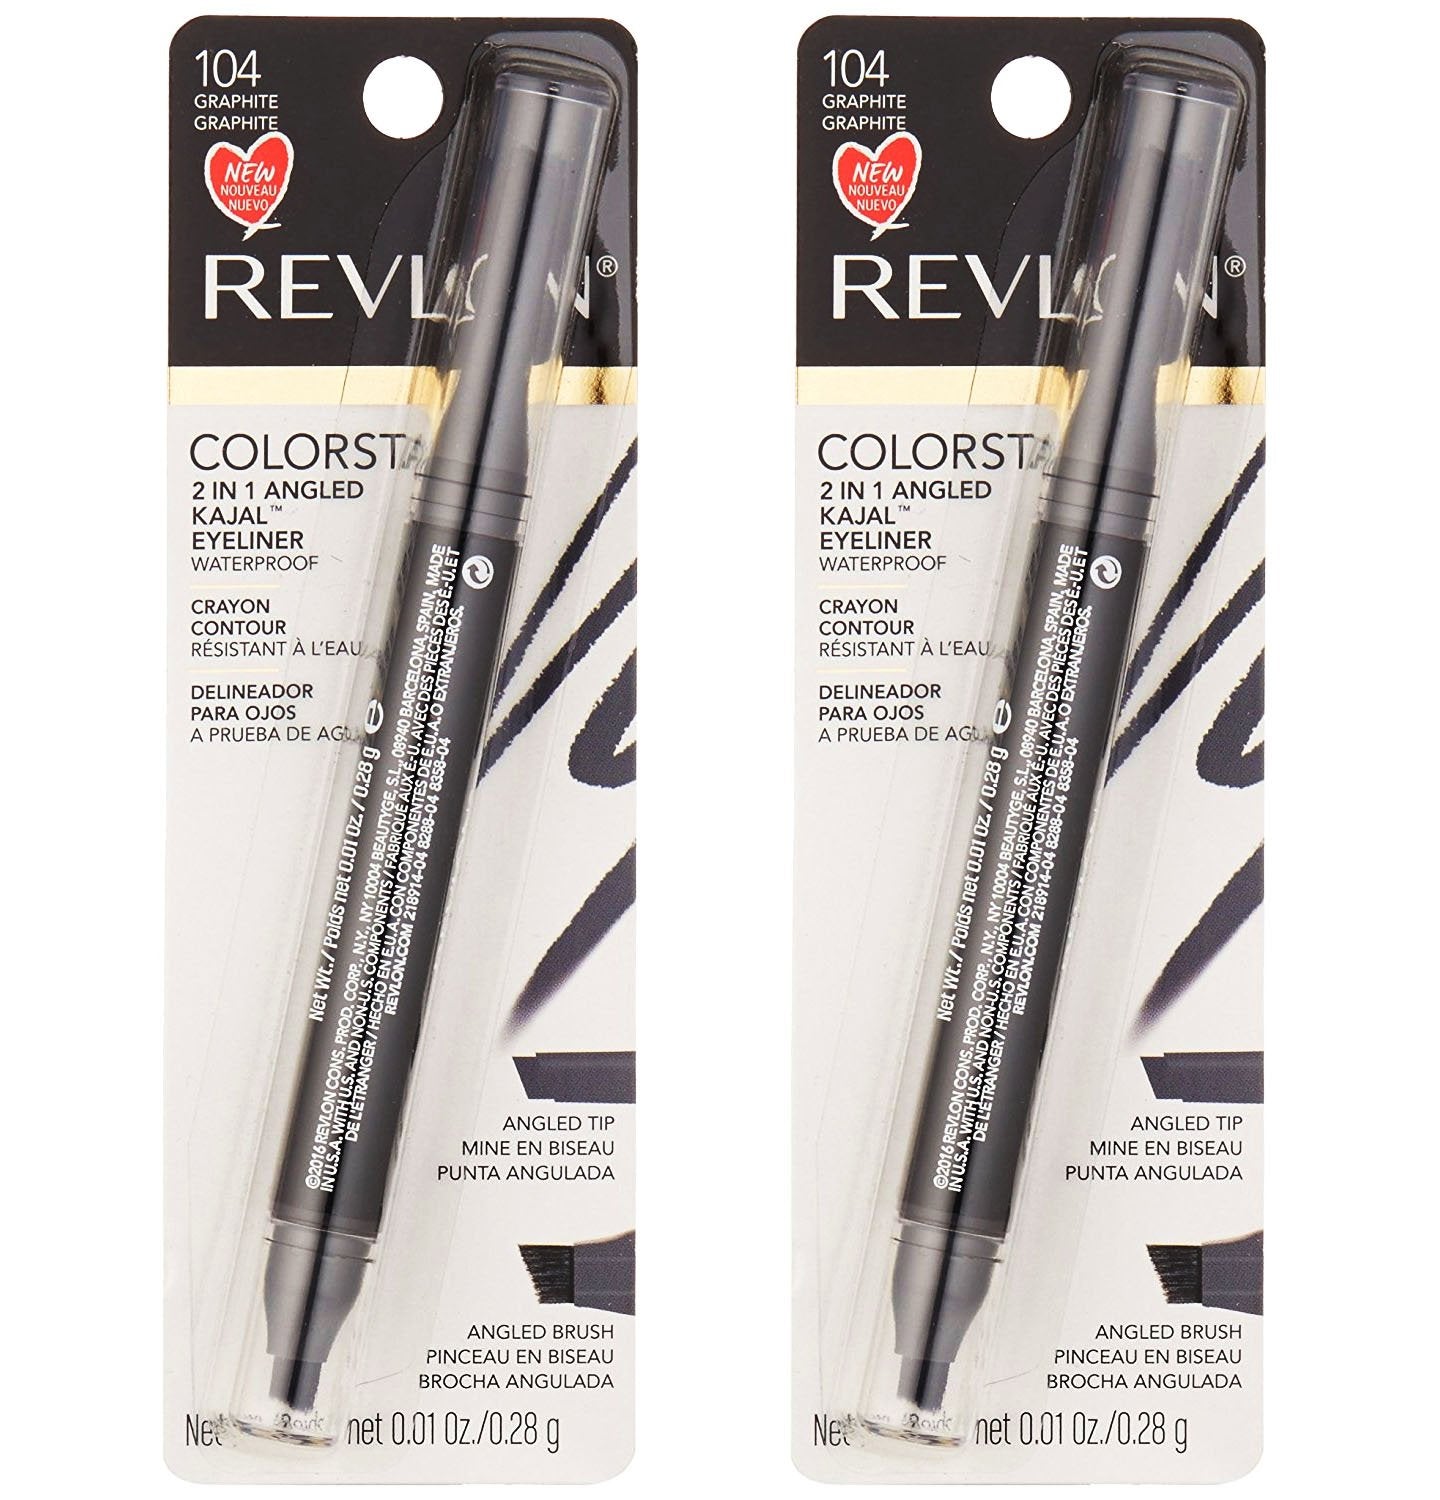 Revlon Colorstay 2 in 1 Angled Kajal Waterproof Eyeliner, 104 Graphite (Pack of 2)